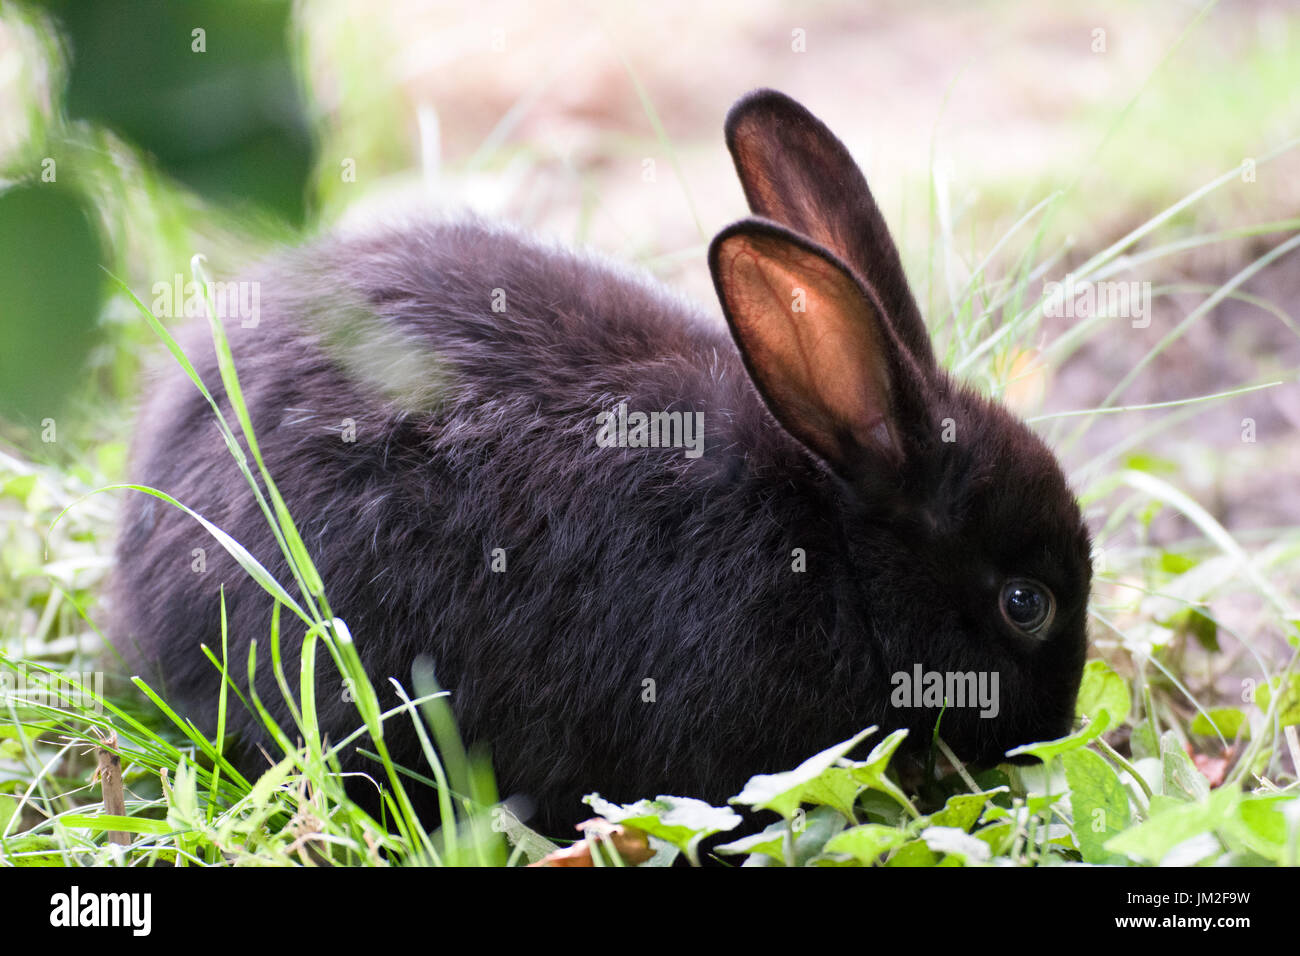 Black rabbit grazing Stock Photo